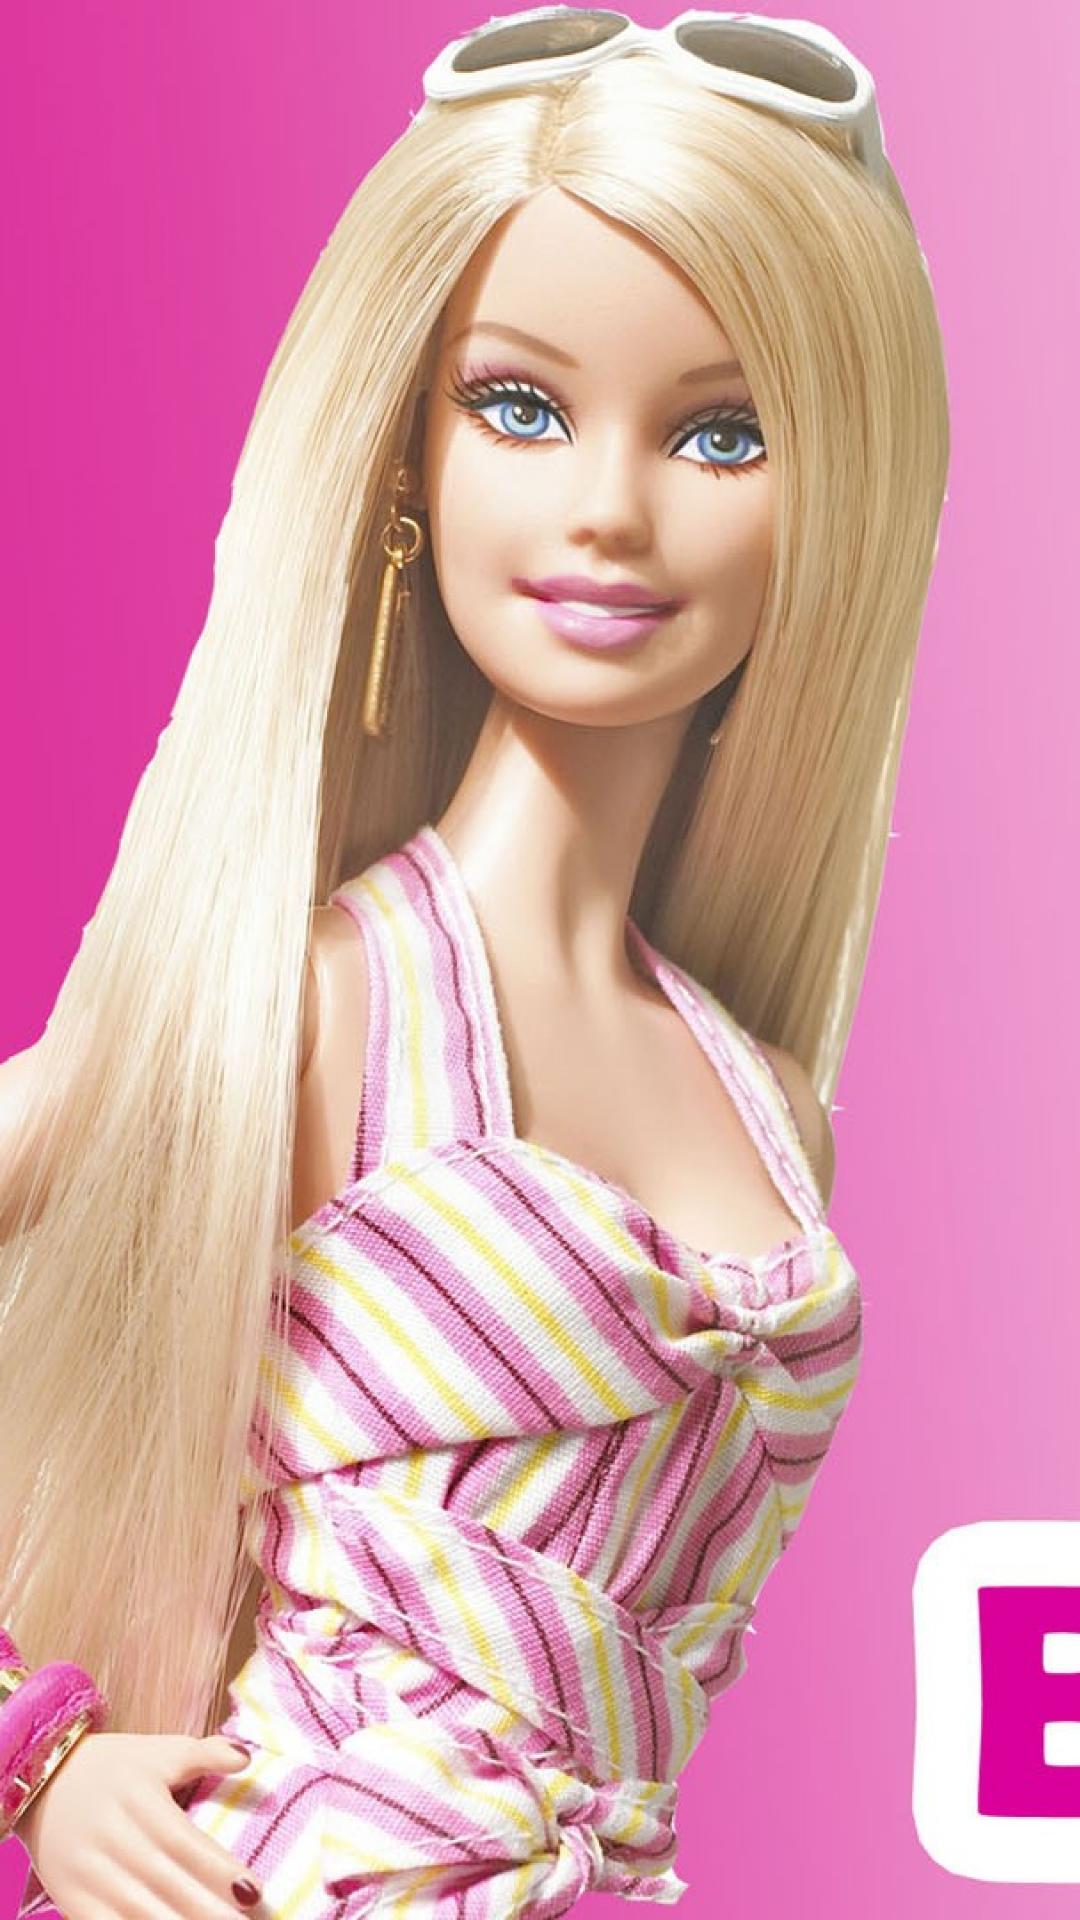 barbie wallpaper,puppe,haar,barbie,blond,spielzeug